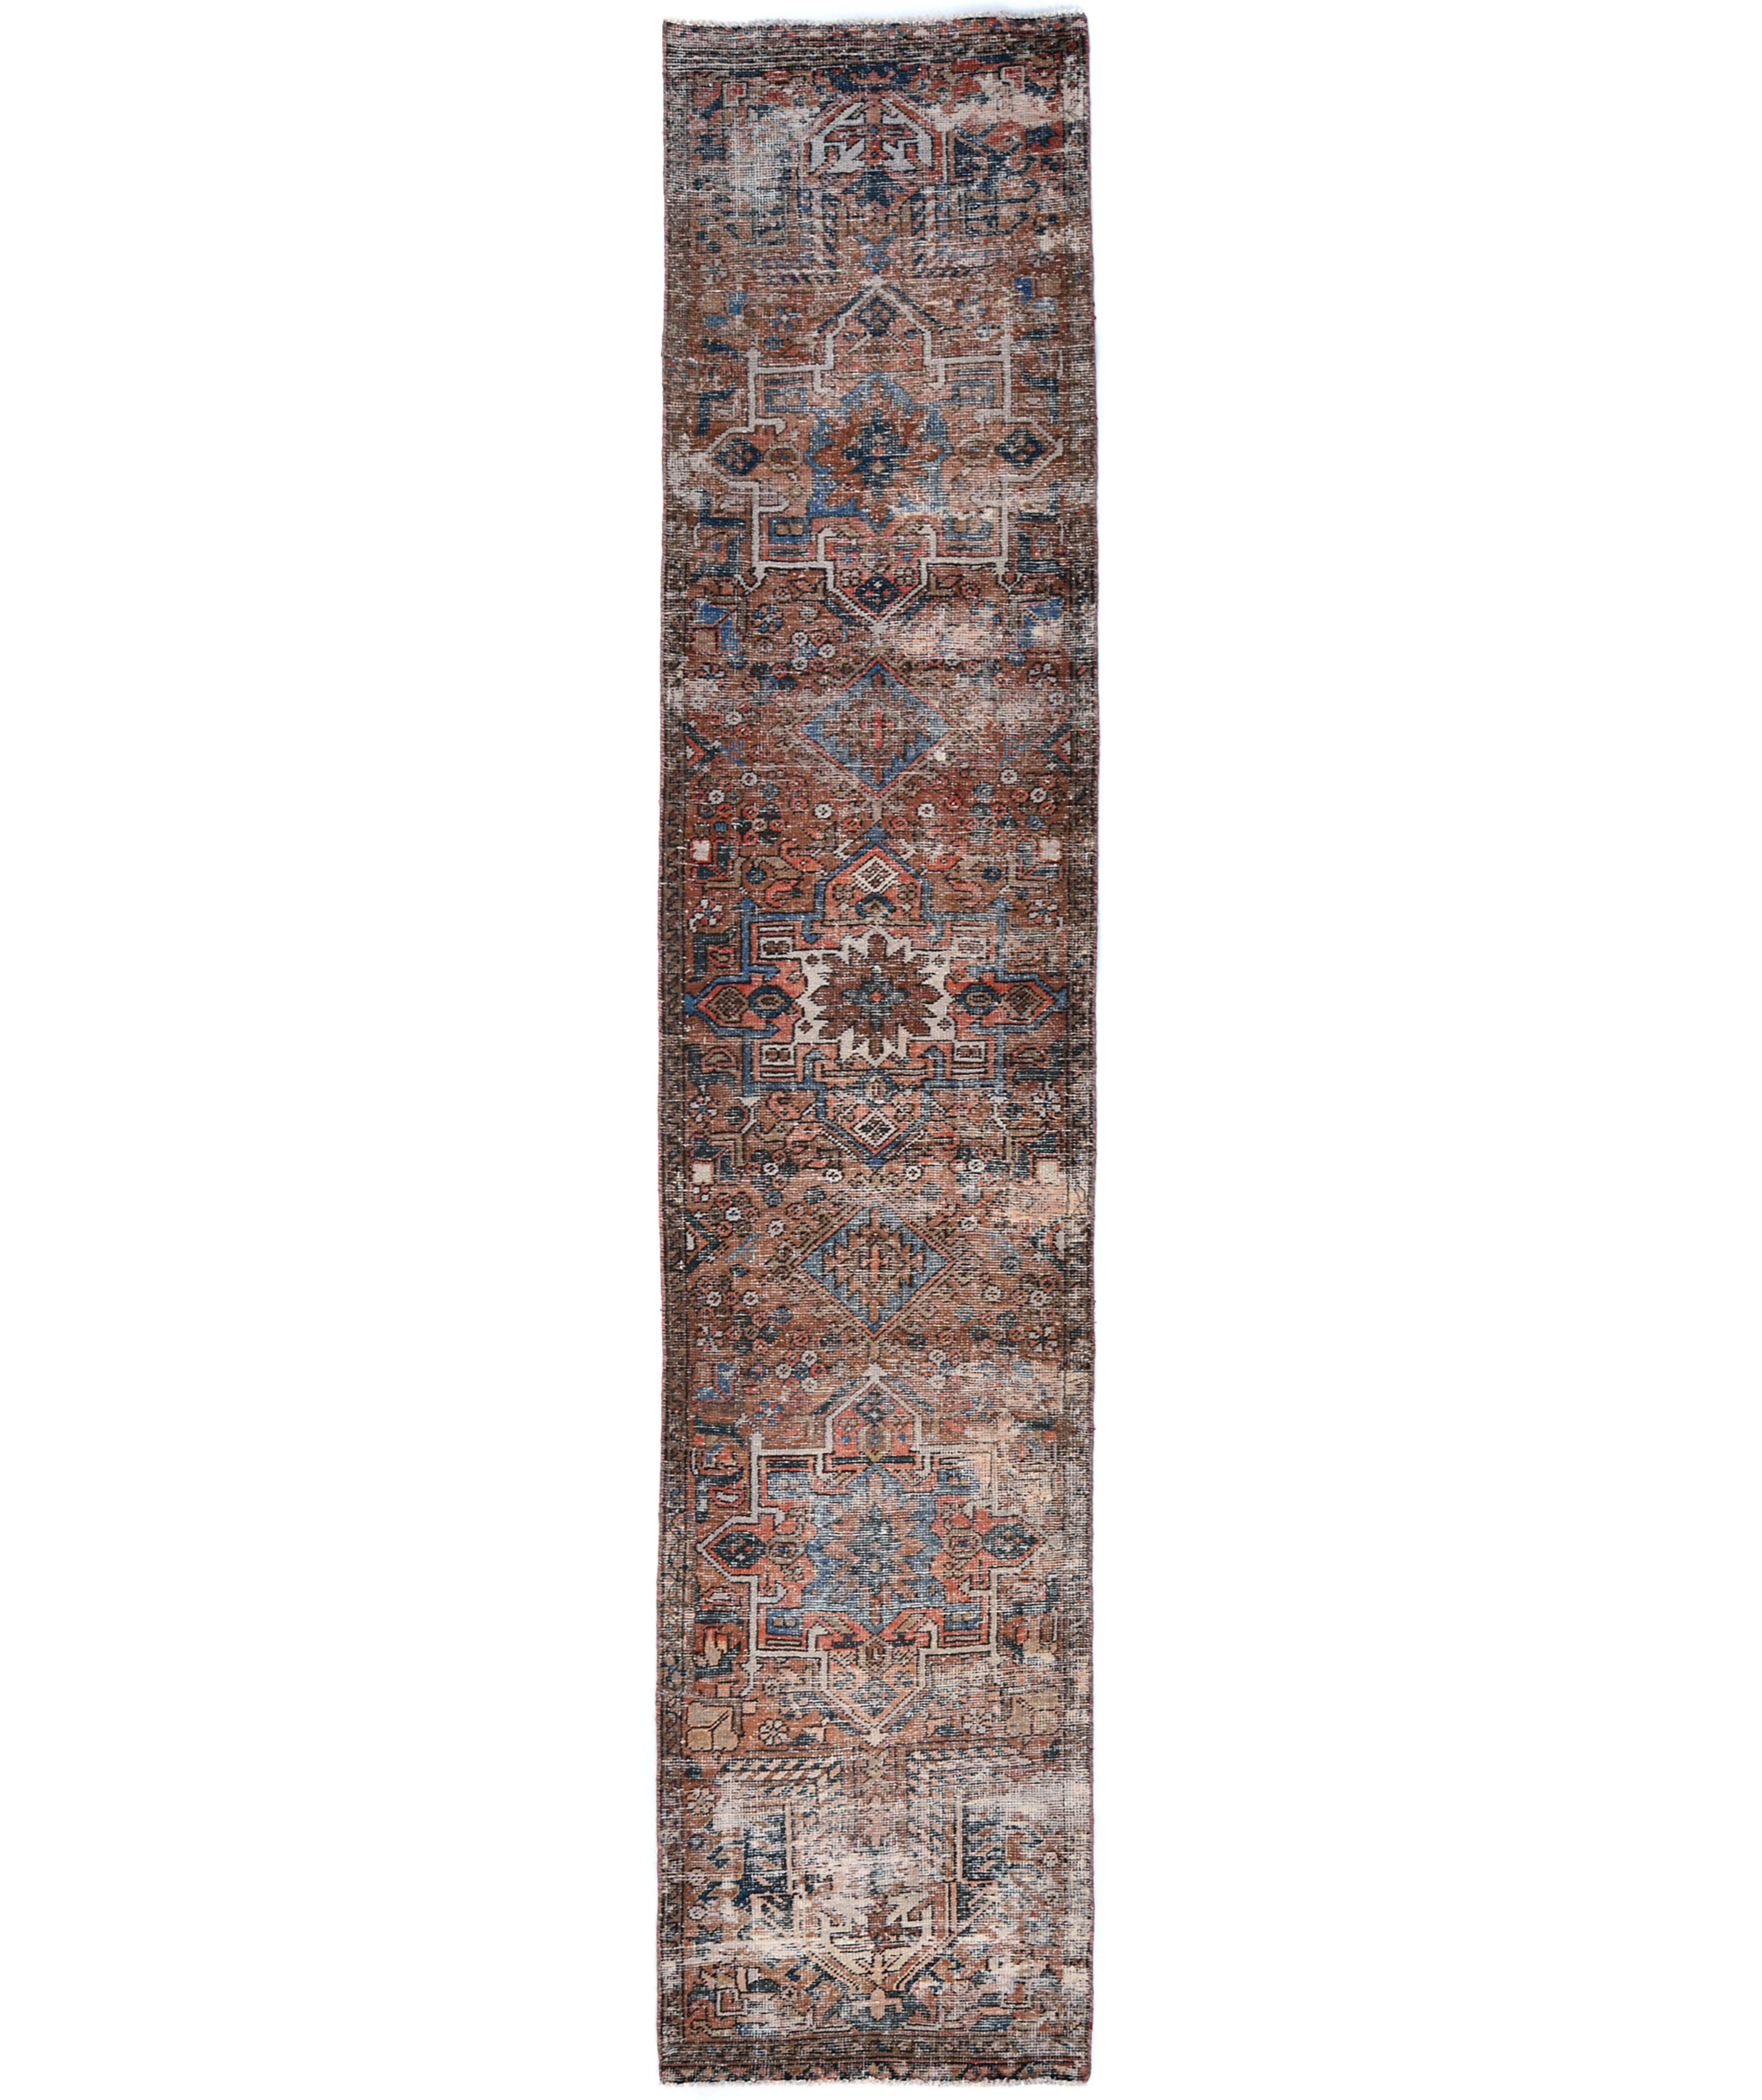 Antique Muted Tribal 2'7X12 Distressed Vintage Oriental Runner Rug